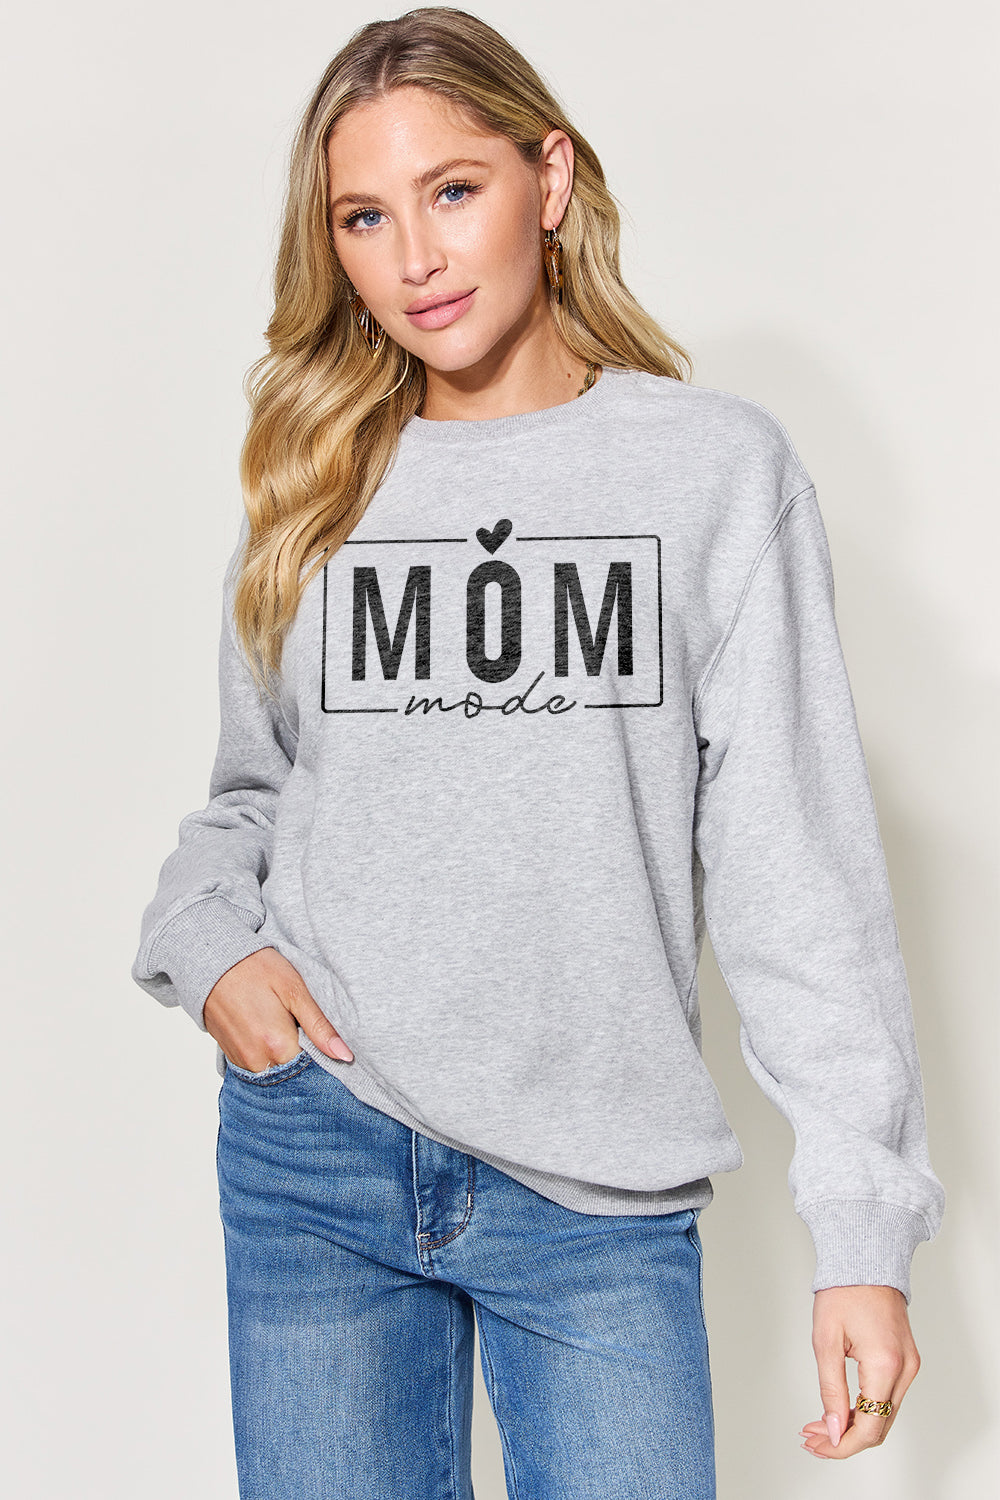 Mom Mode Letter Graphic Long Sleeve Sweatshirt